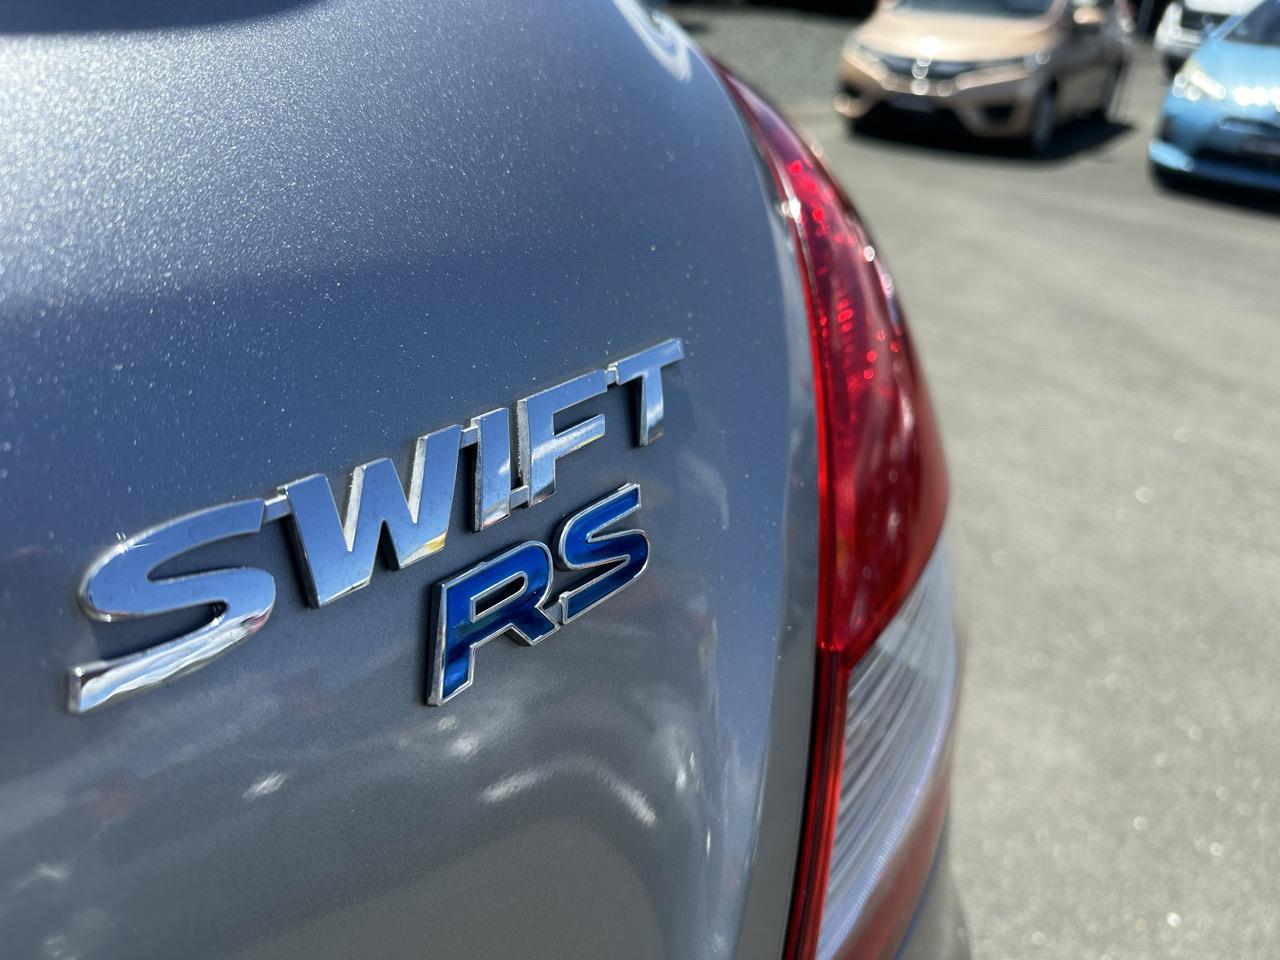 2013 Suzuki Swift RS image 15